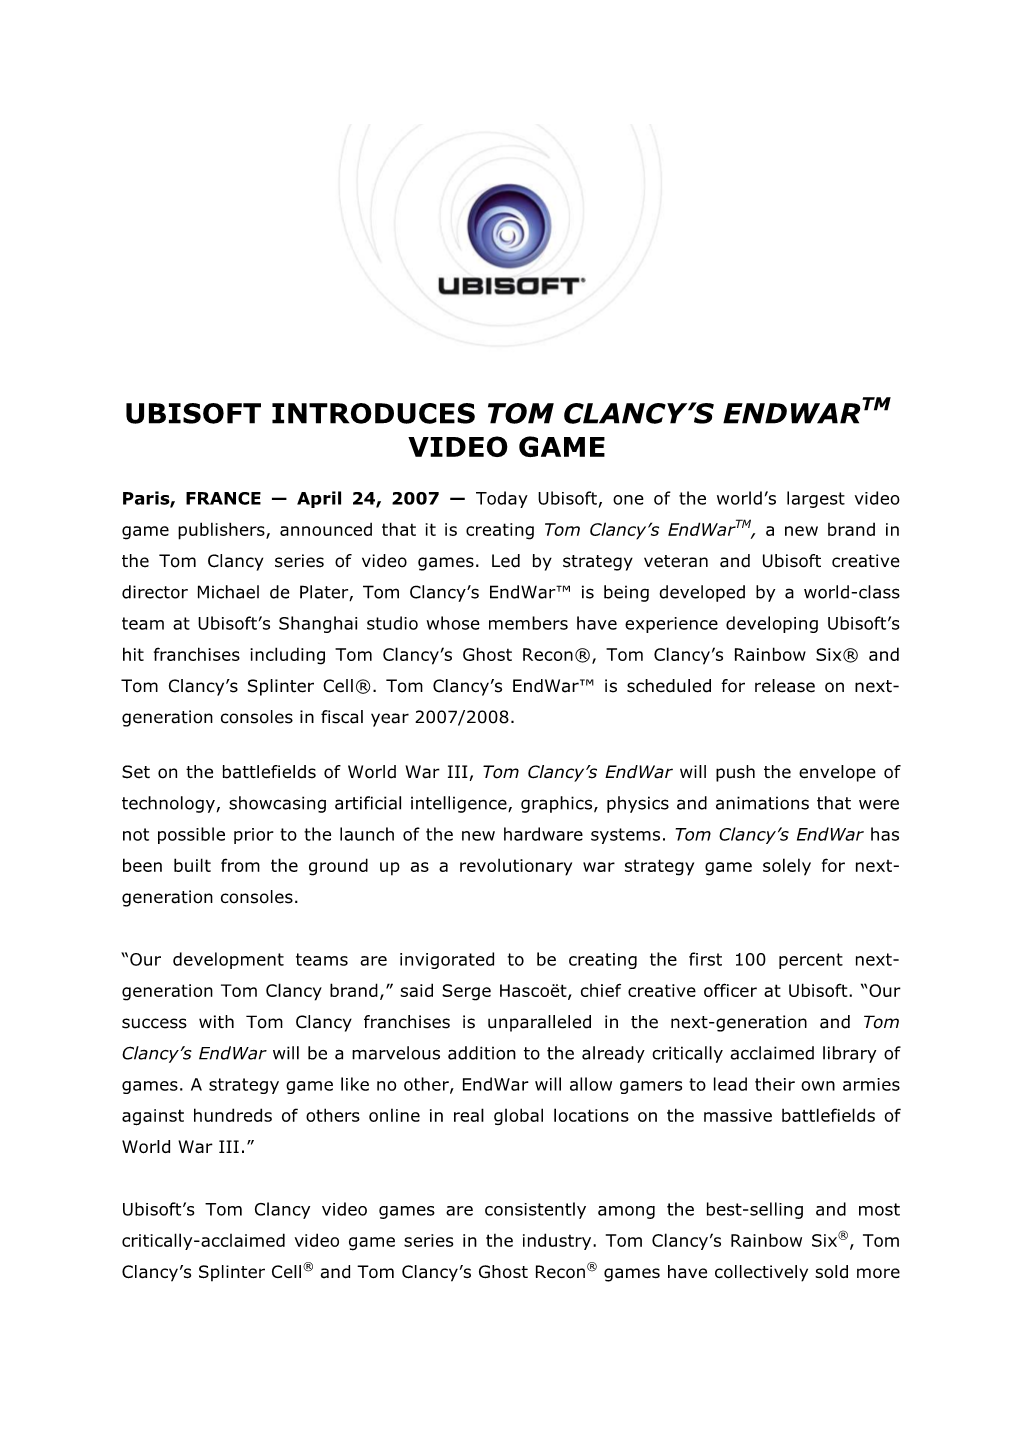 Ubisoft Introduces Tom Clancy's Endwar Video Game